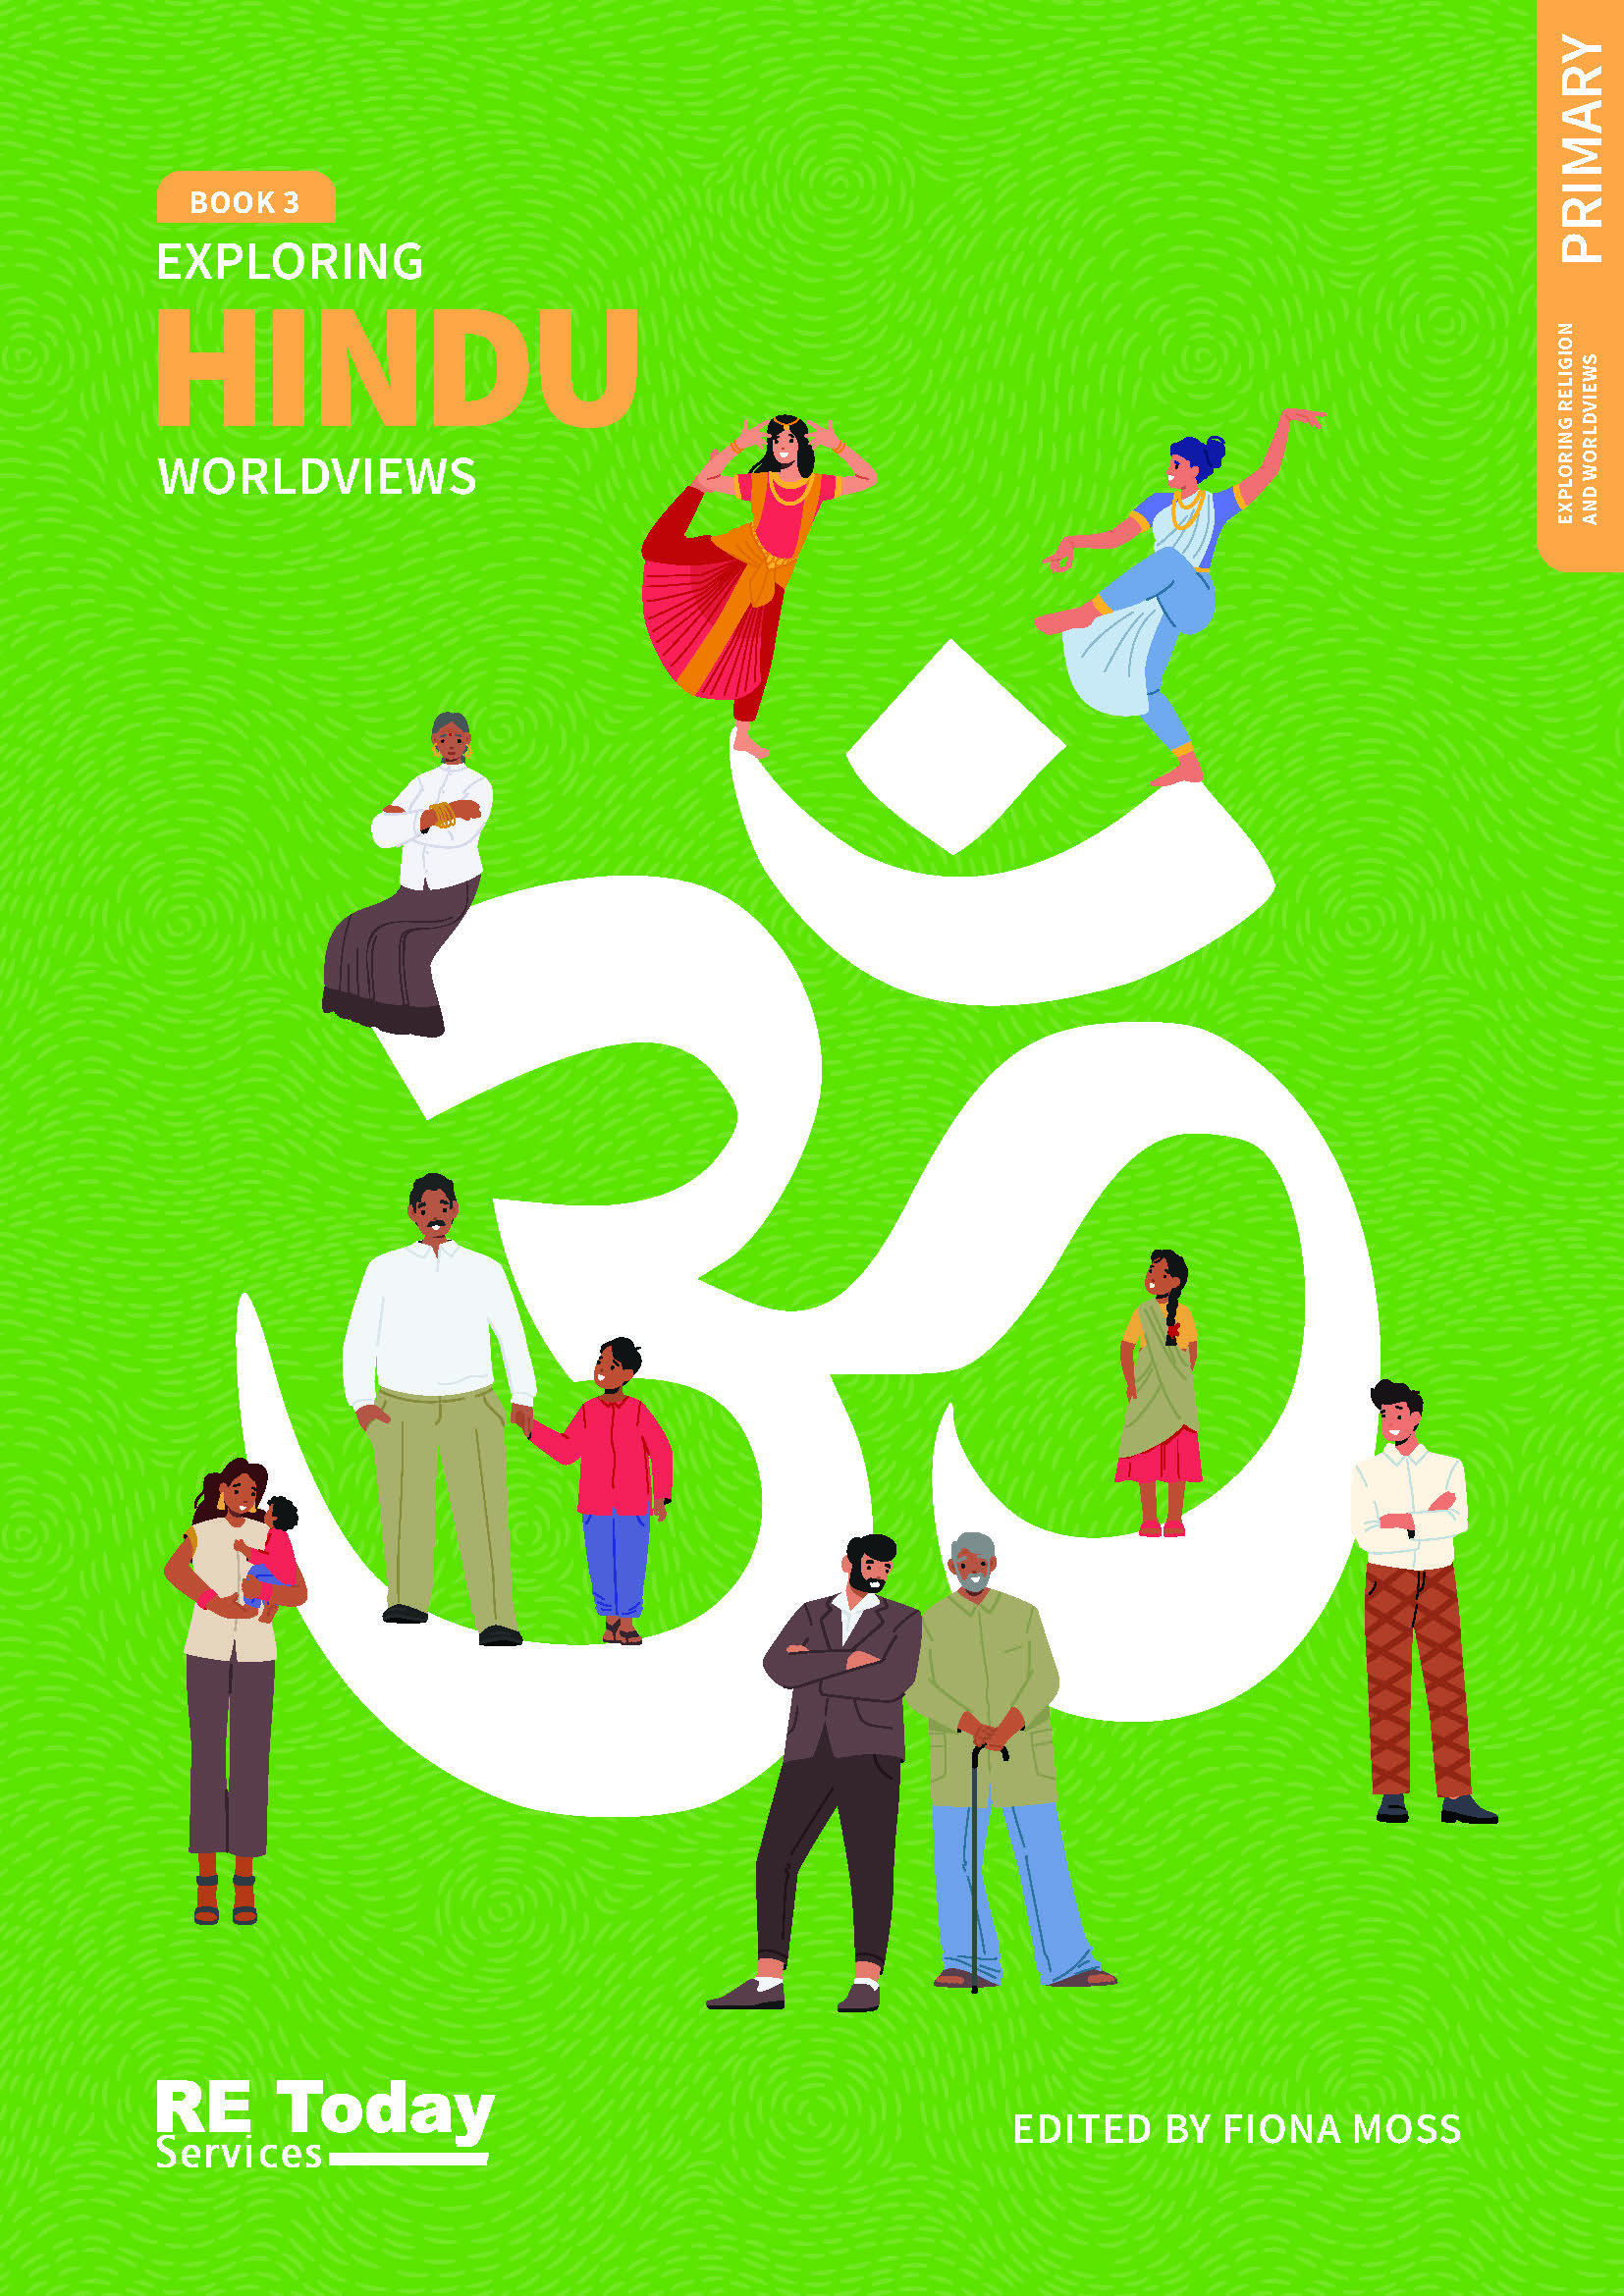 RE Today Services - Exploring Hindu Worldviews